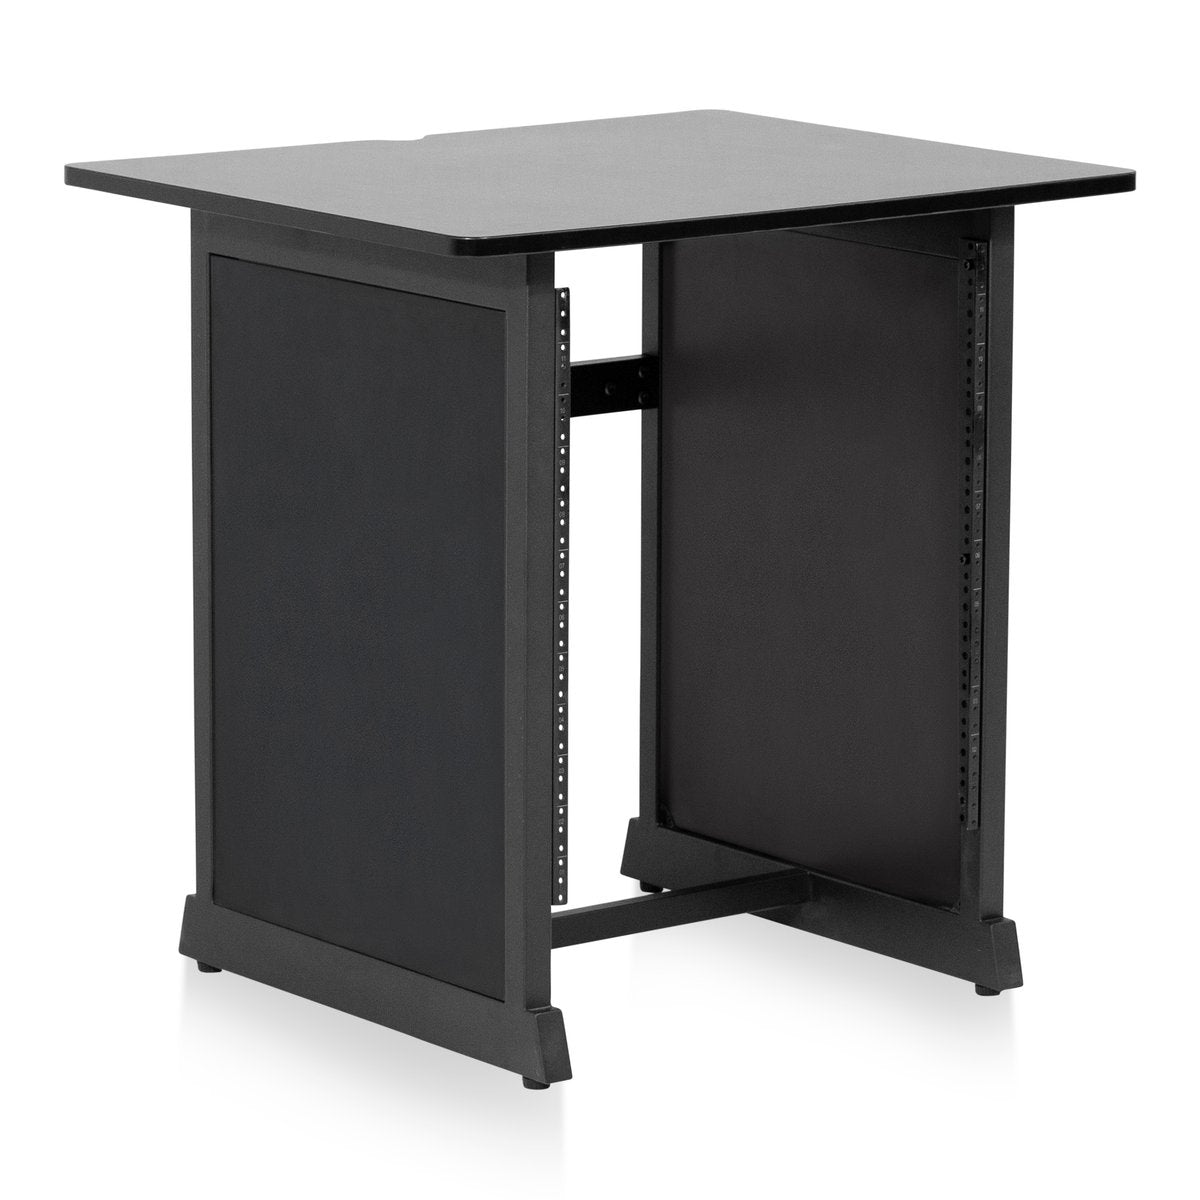 Content Creator Furniture Series 12U Studio Rack Table in Black Finish